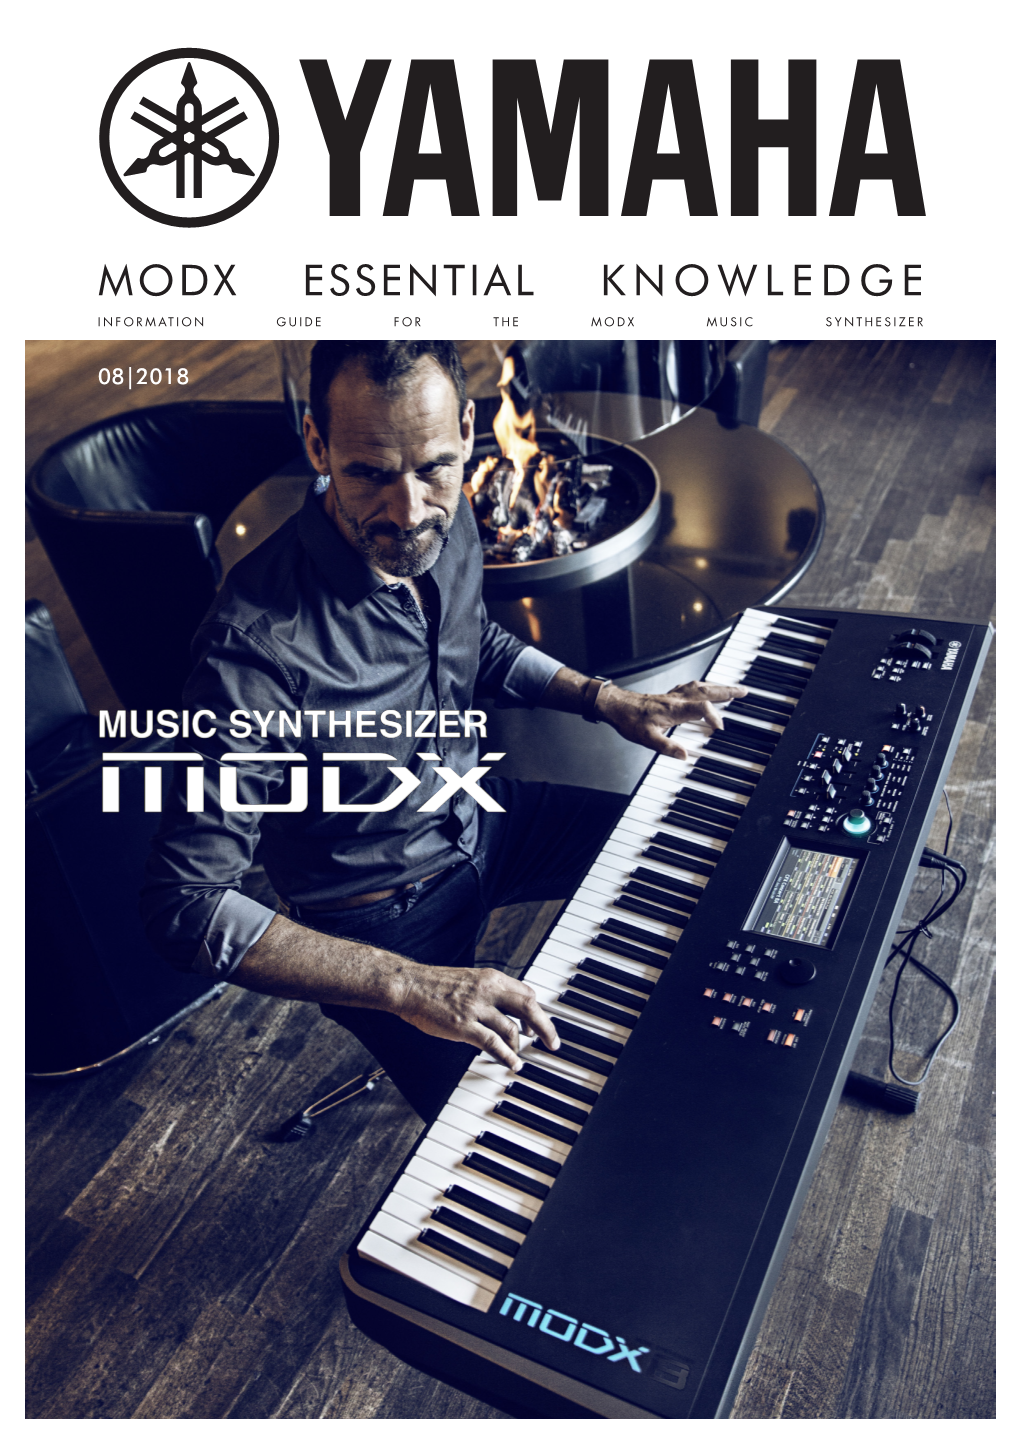 Modx Essential Knowledge